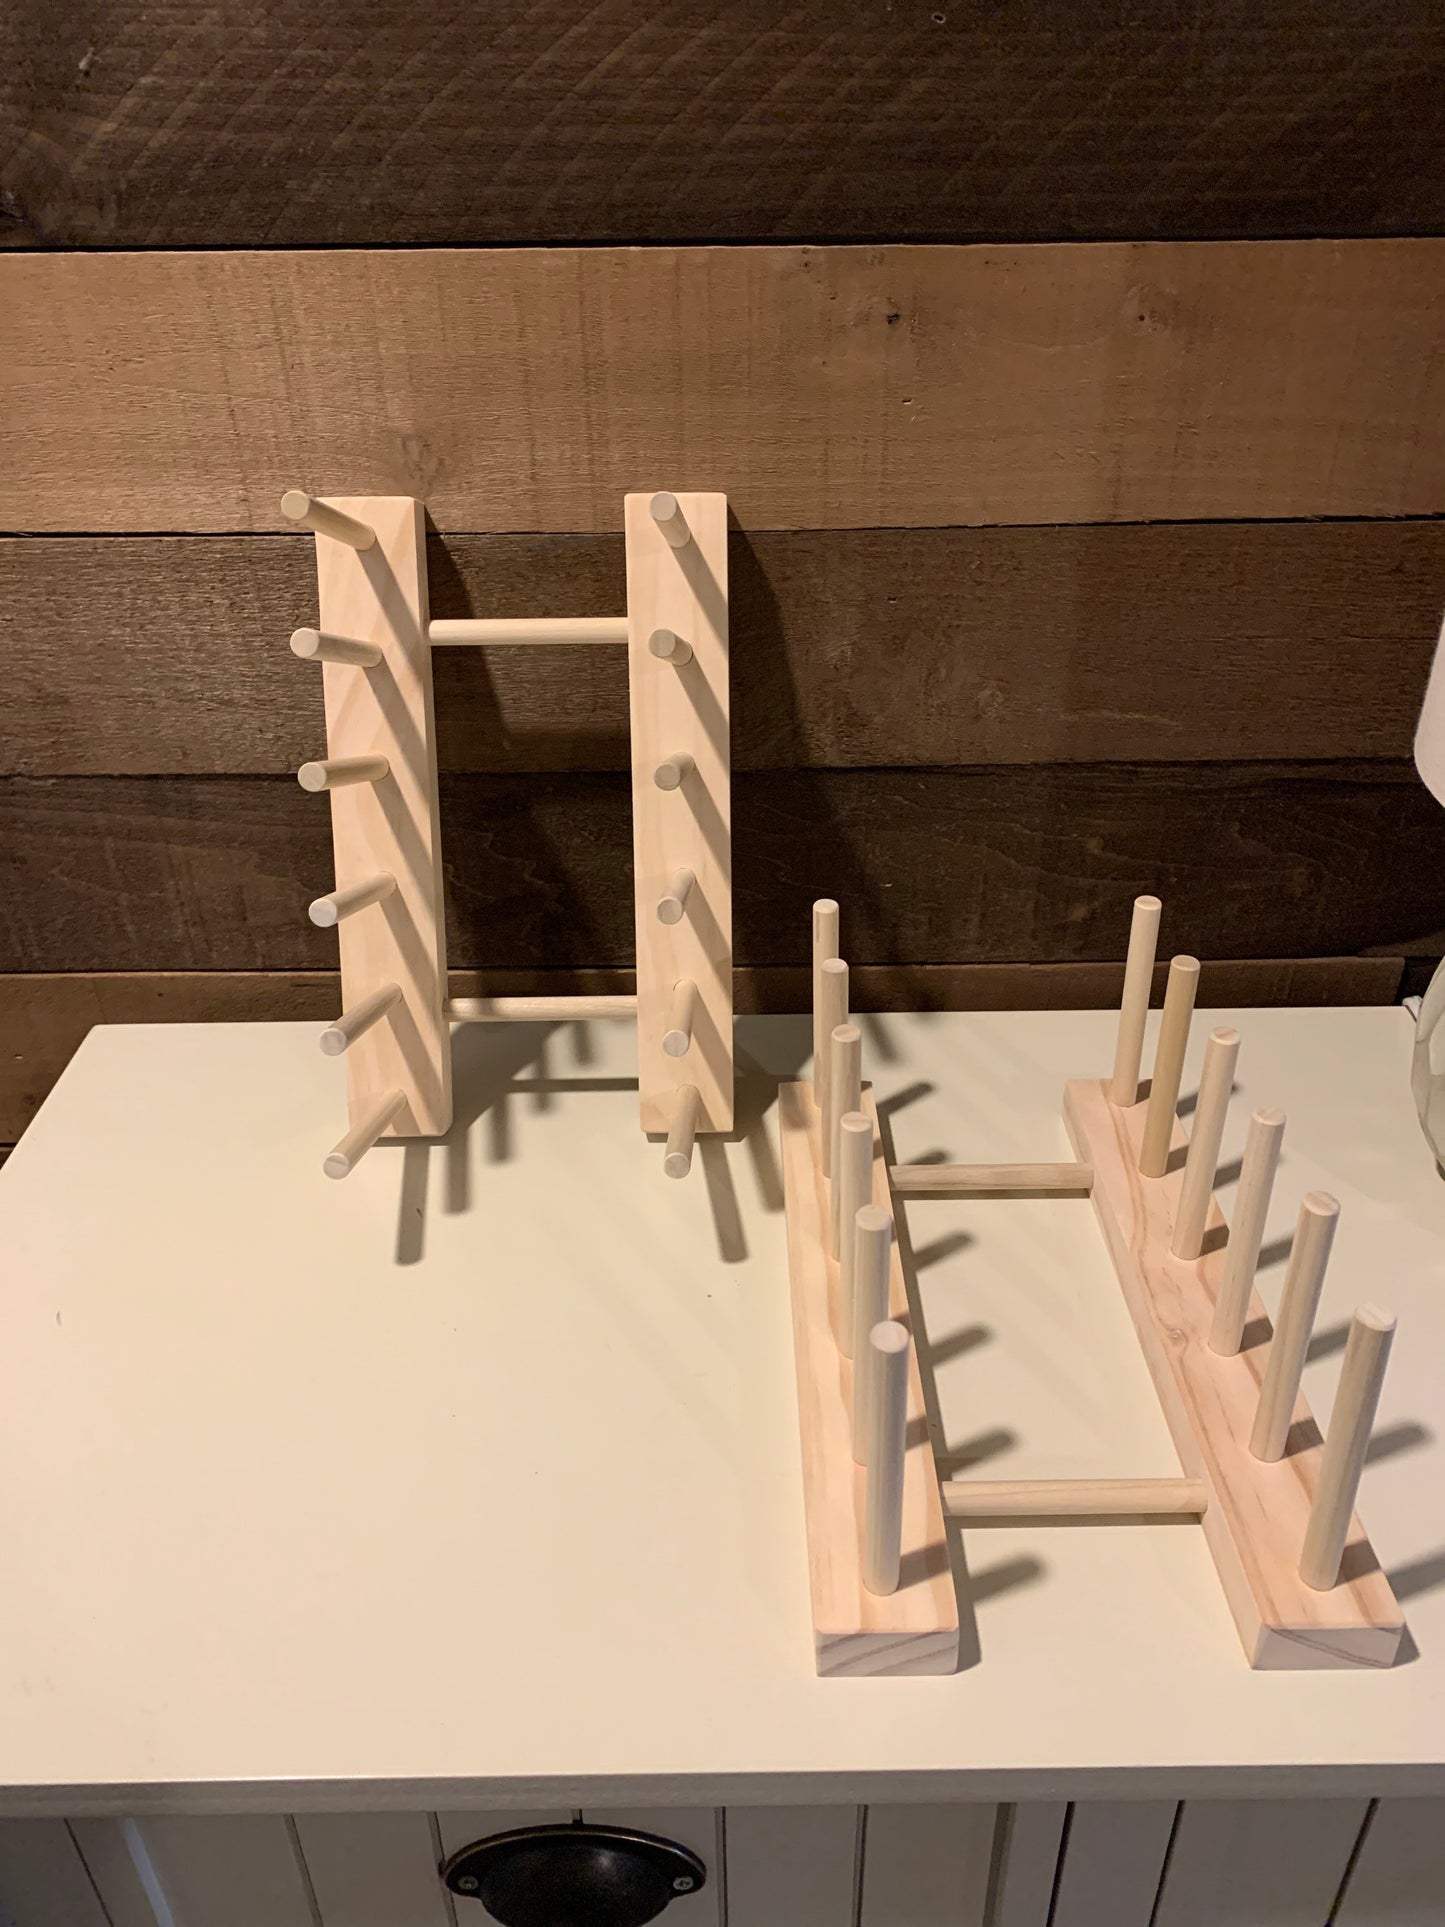 2 Small Wooden Dowel Storage Racks - Framed Art, Picture Frame, Plate Rack, Display